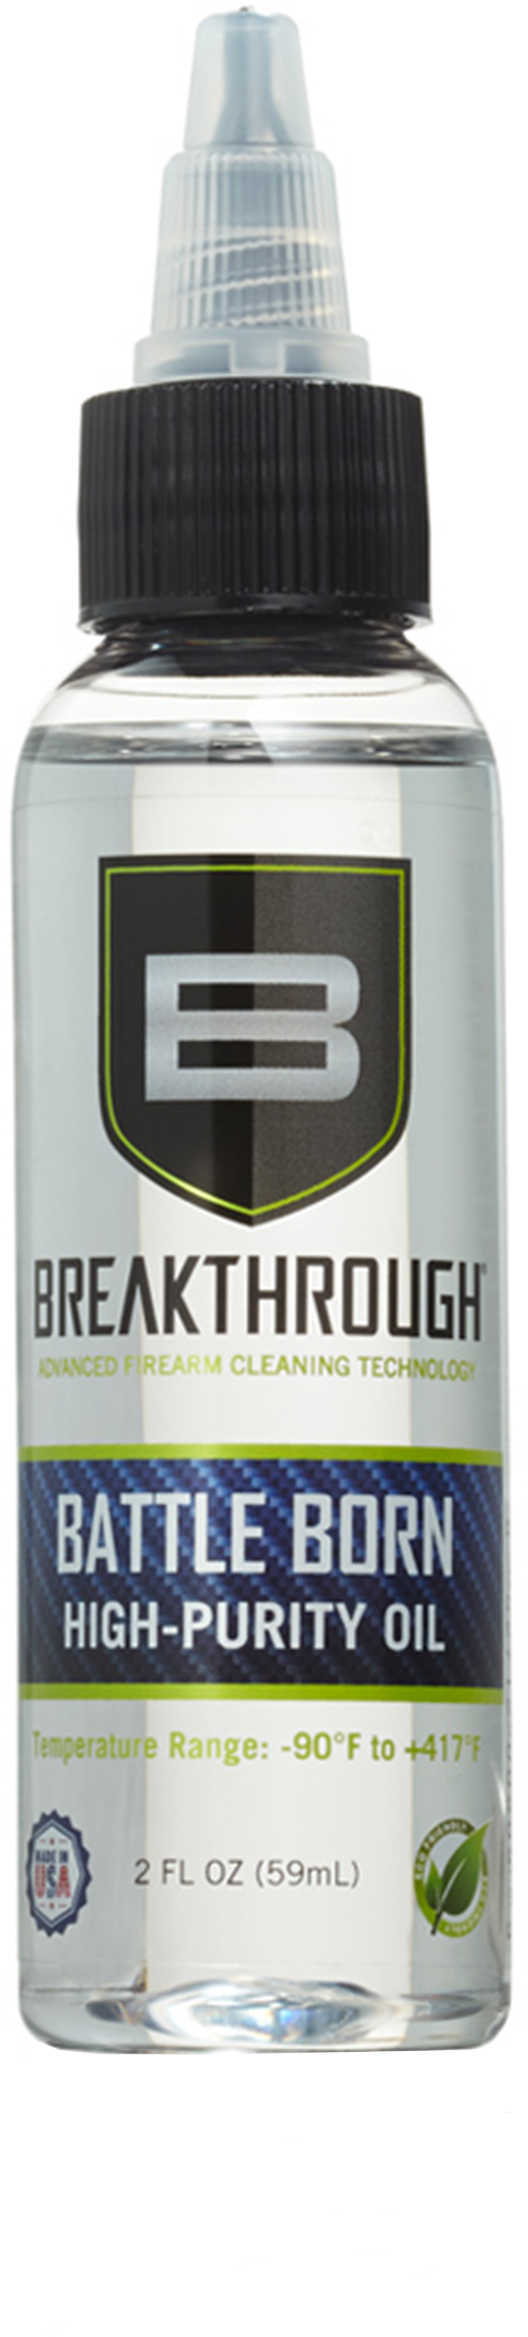 Breakthrough Battle Born High Purity Oil 2Oz Bottle Odorless